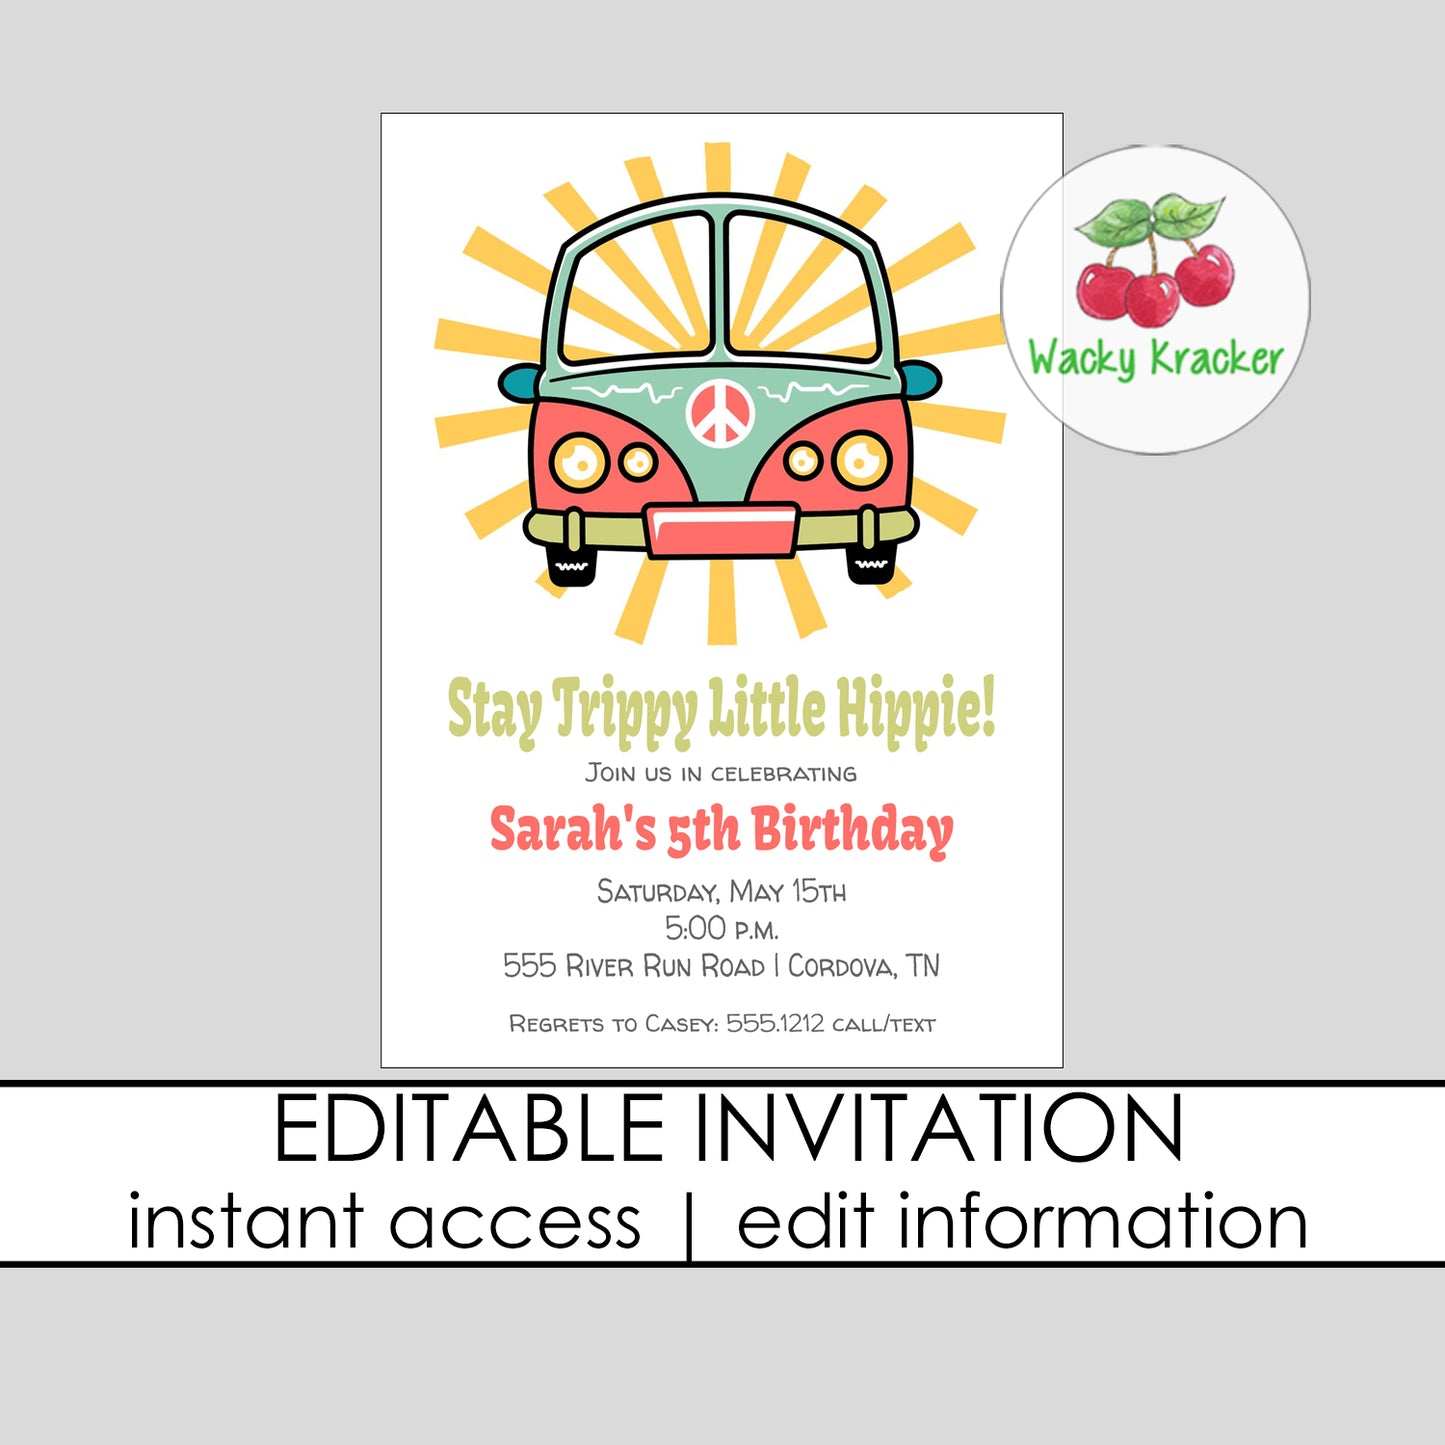 Groovy Birthday Invitation